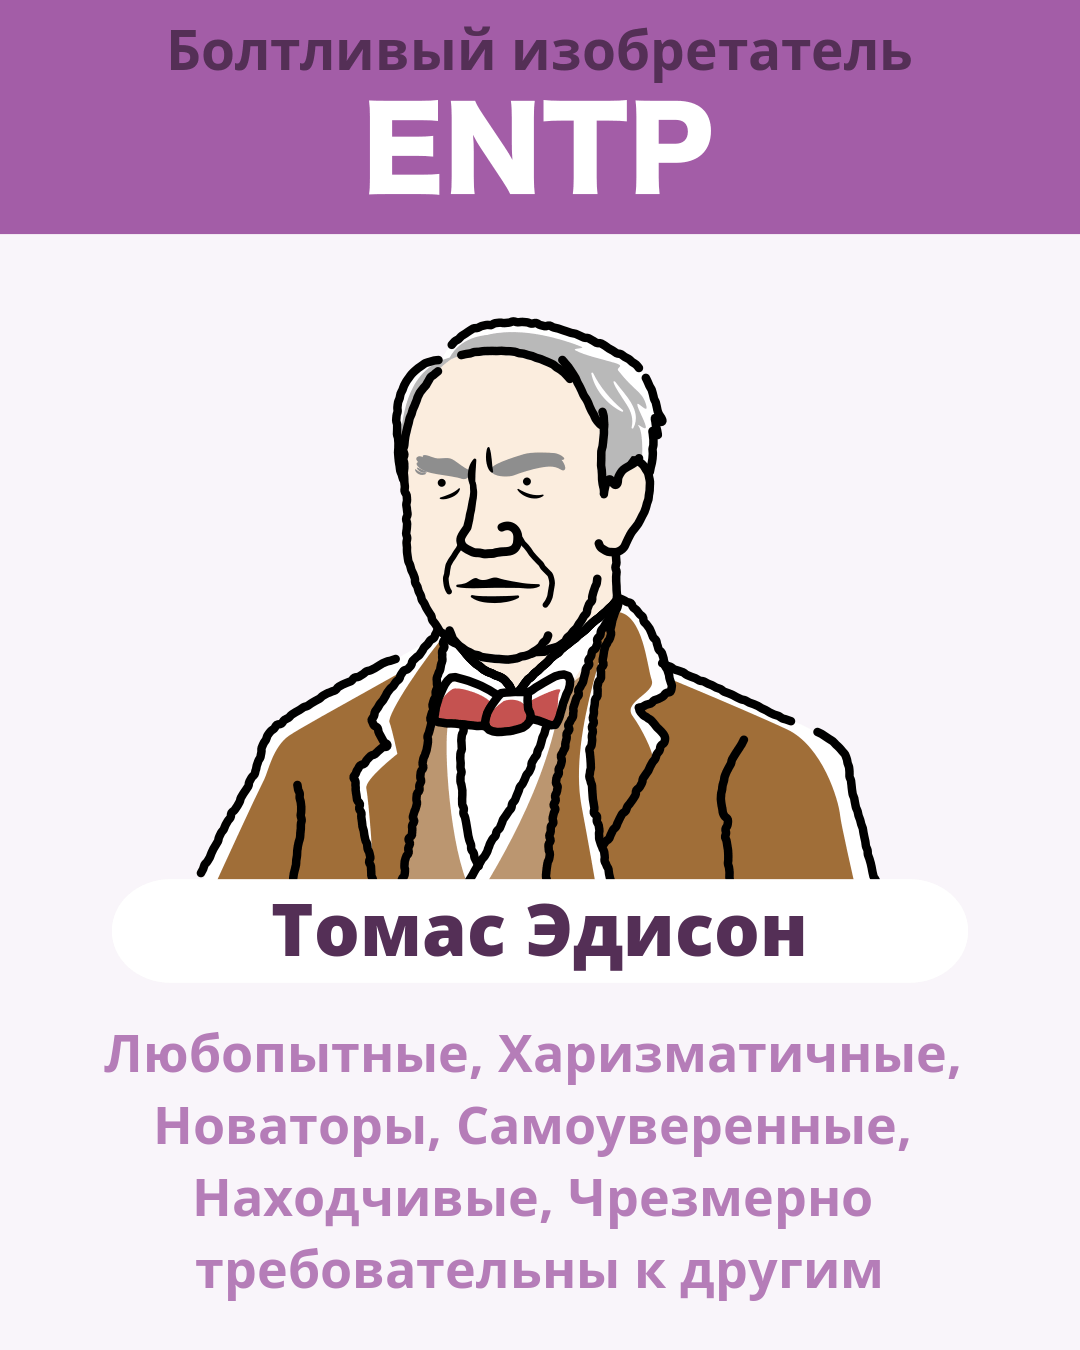 Томас Эдисон - ENTP